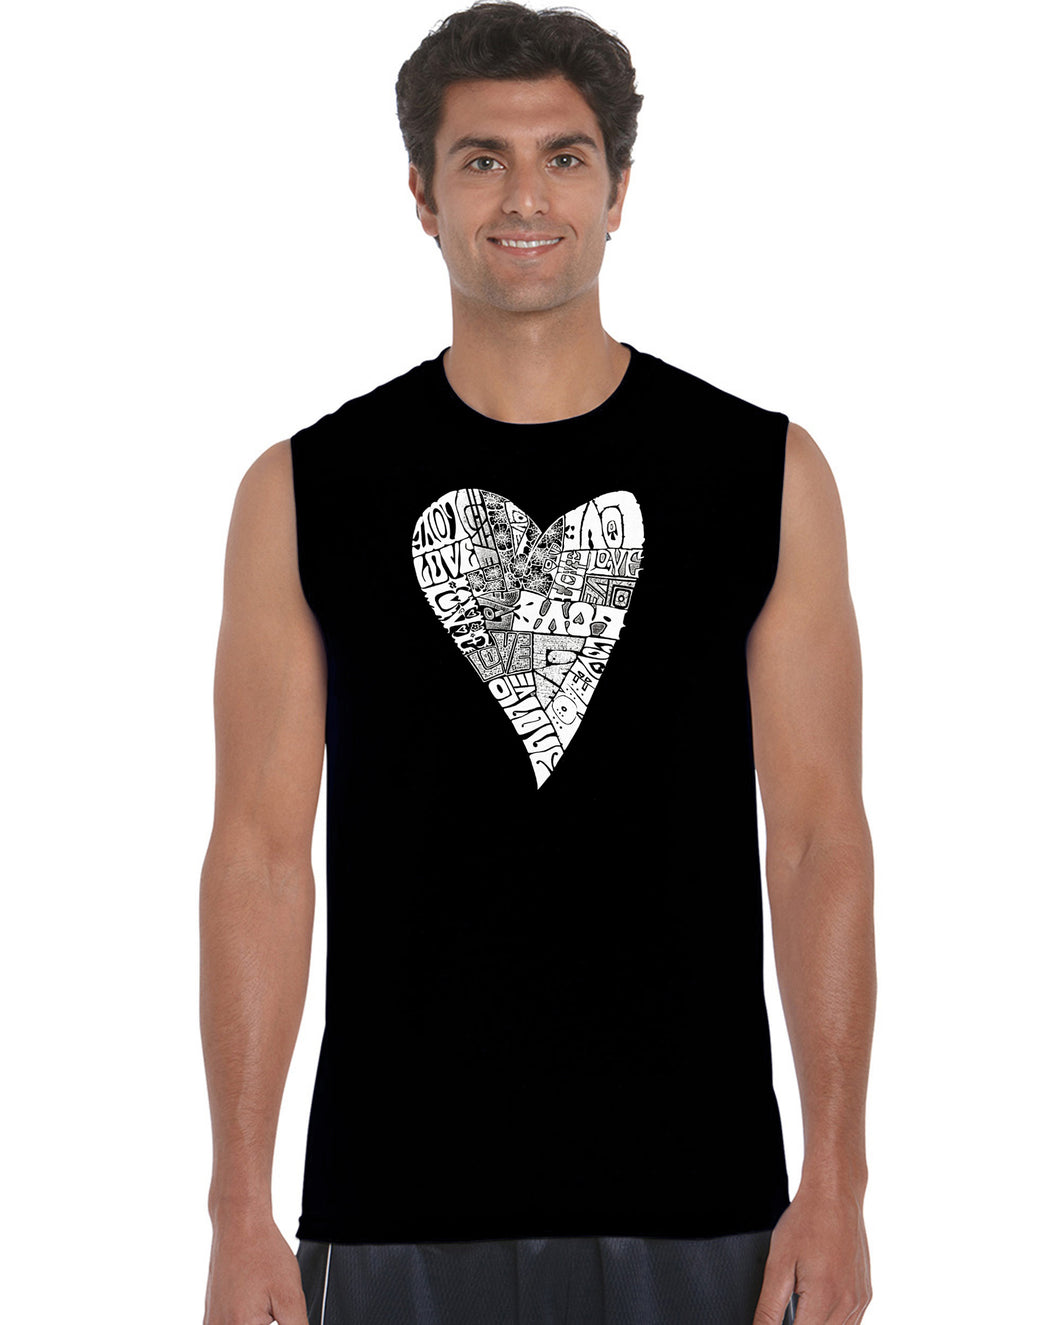 Lots of Love - Men's Word Art Sleeveless T-Shirt